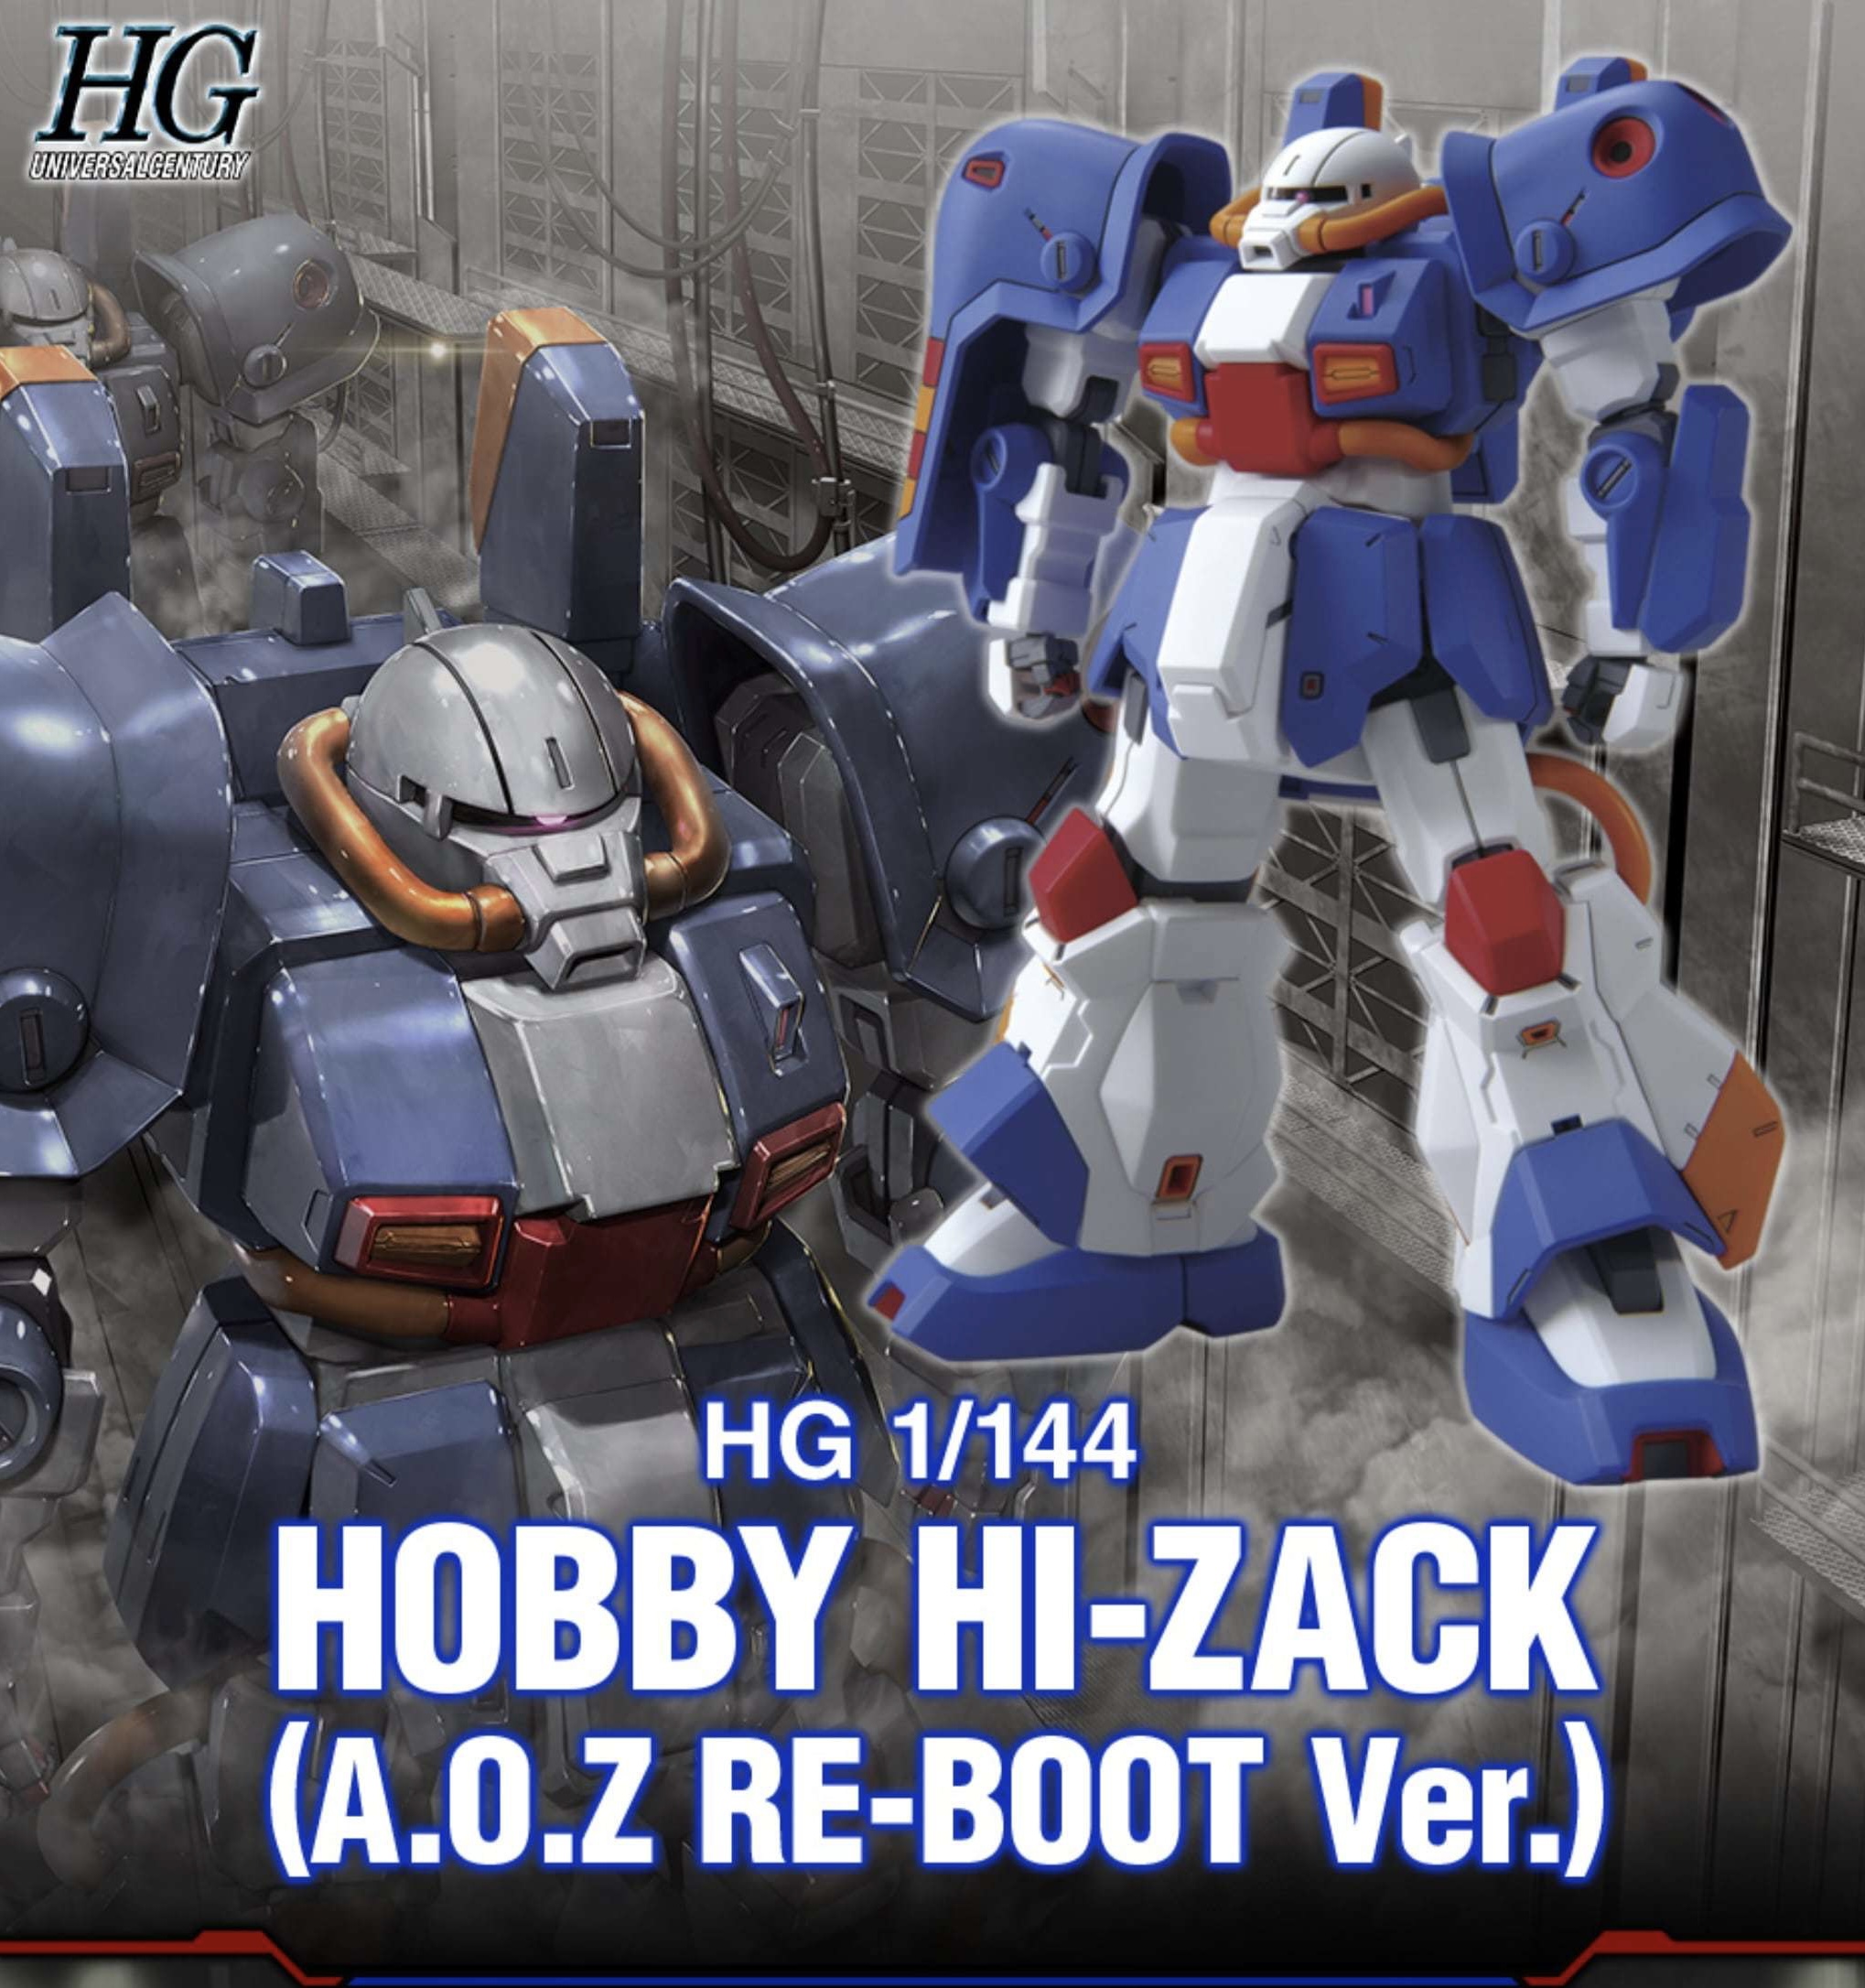 HGUC 1/144 Hobby Hi-zack (AOZ REBOOT VER) - Release Info